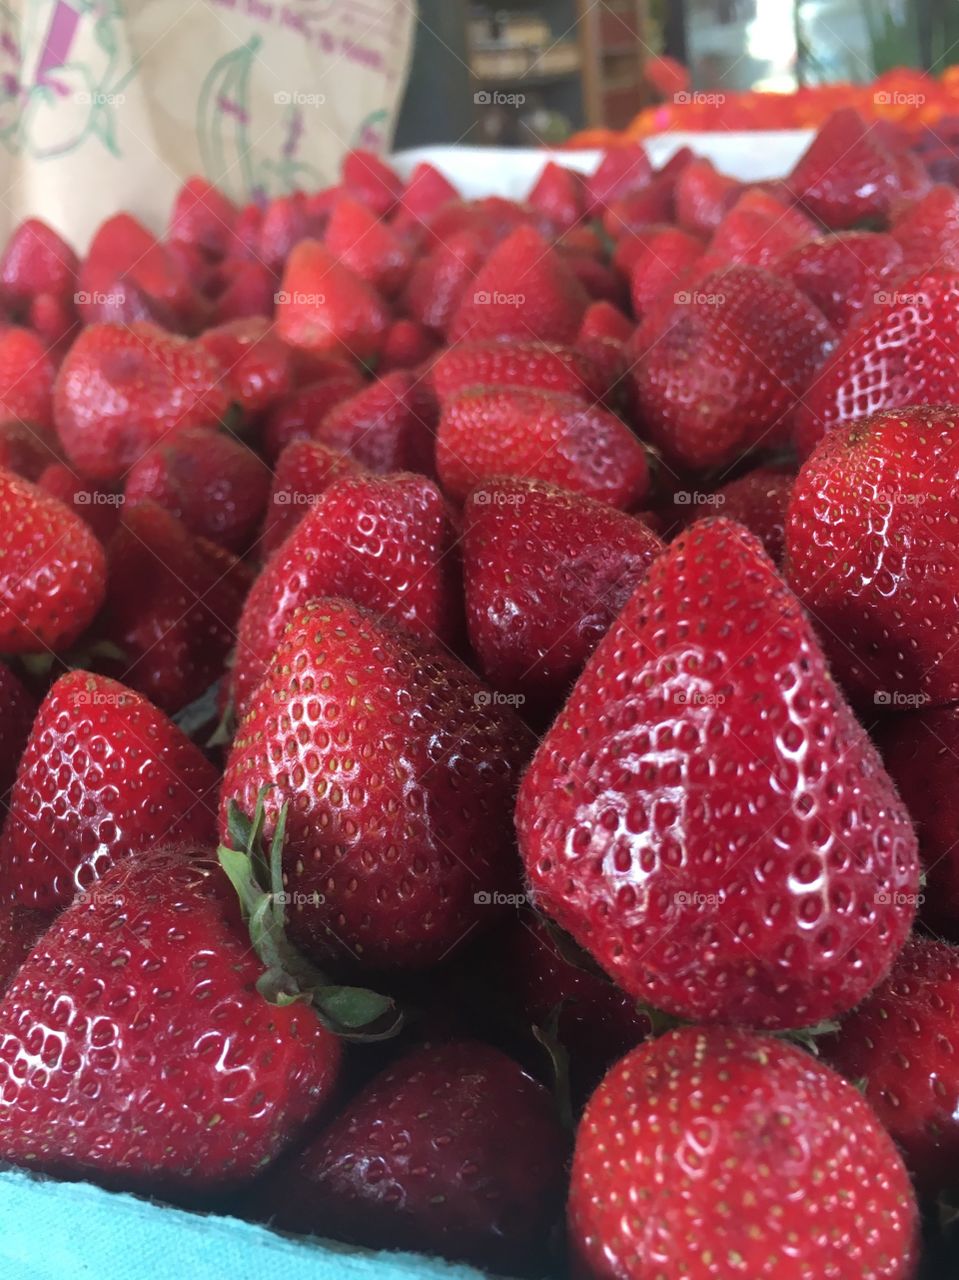 Farm fresh strawberries, and lots of them!